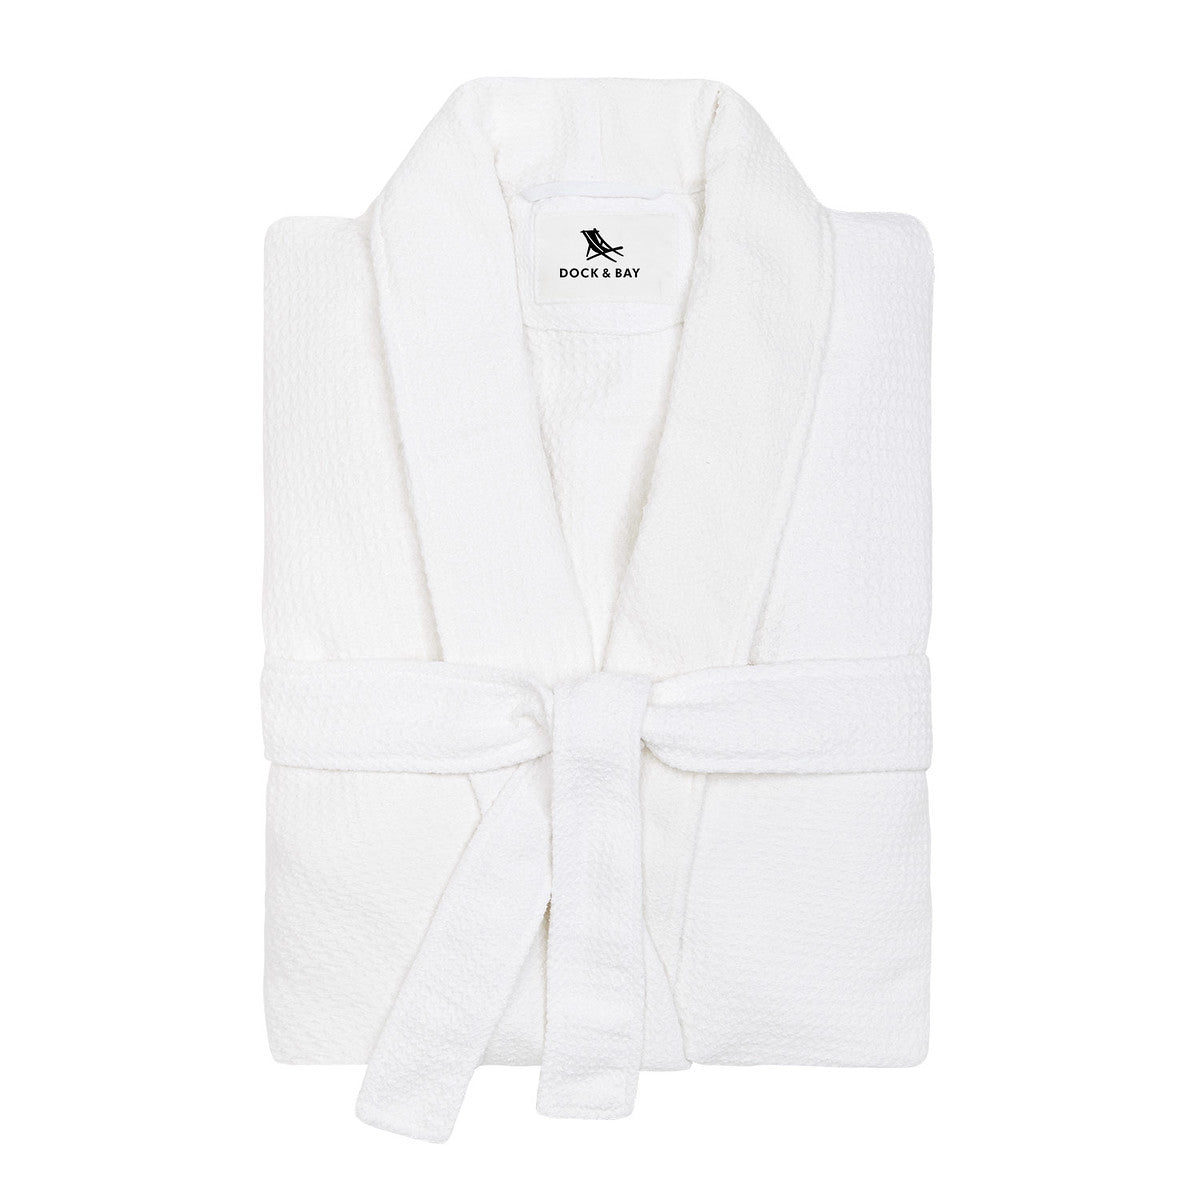 Dock & Bay Robe + Hair Wrap + Towel - Bundle - Crystal White